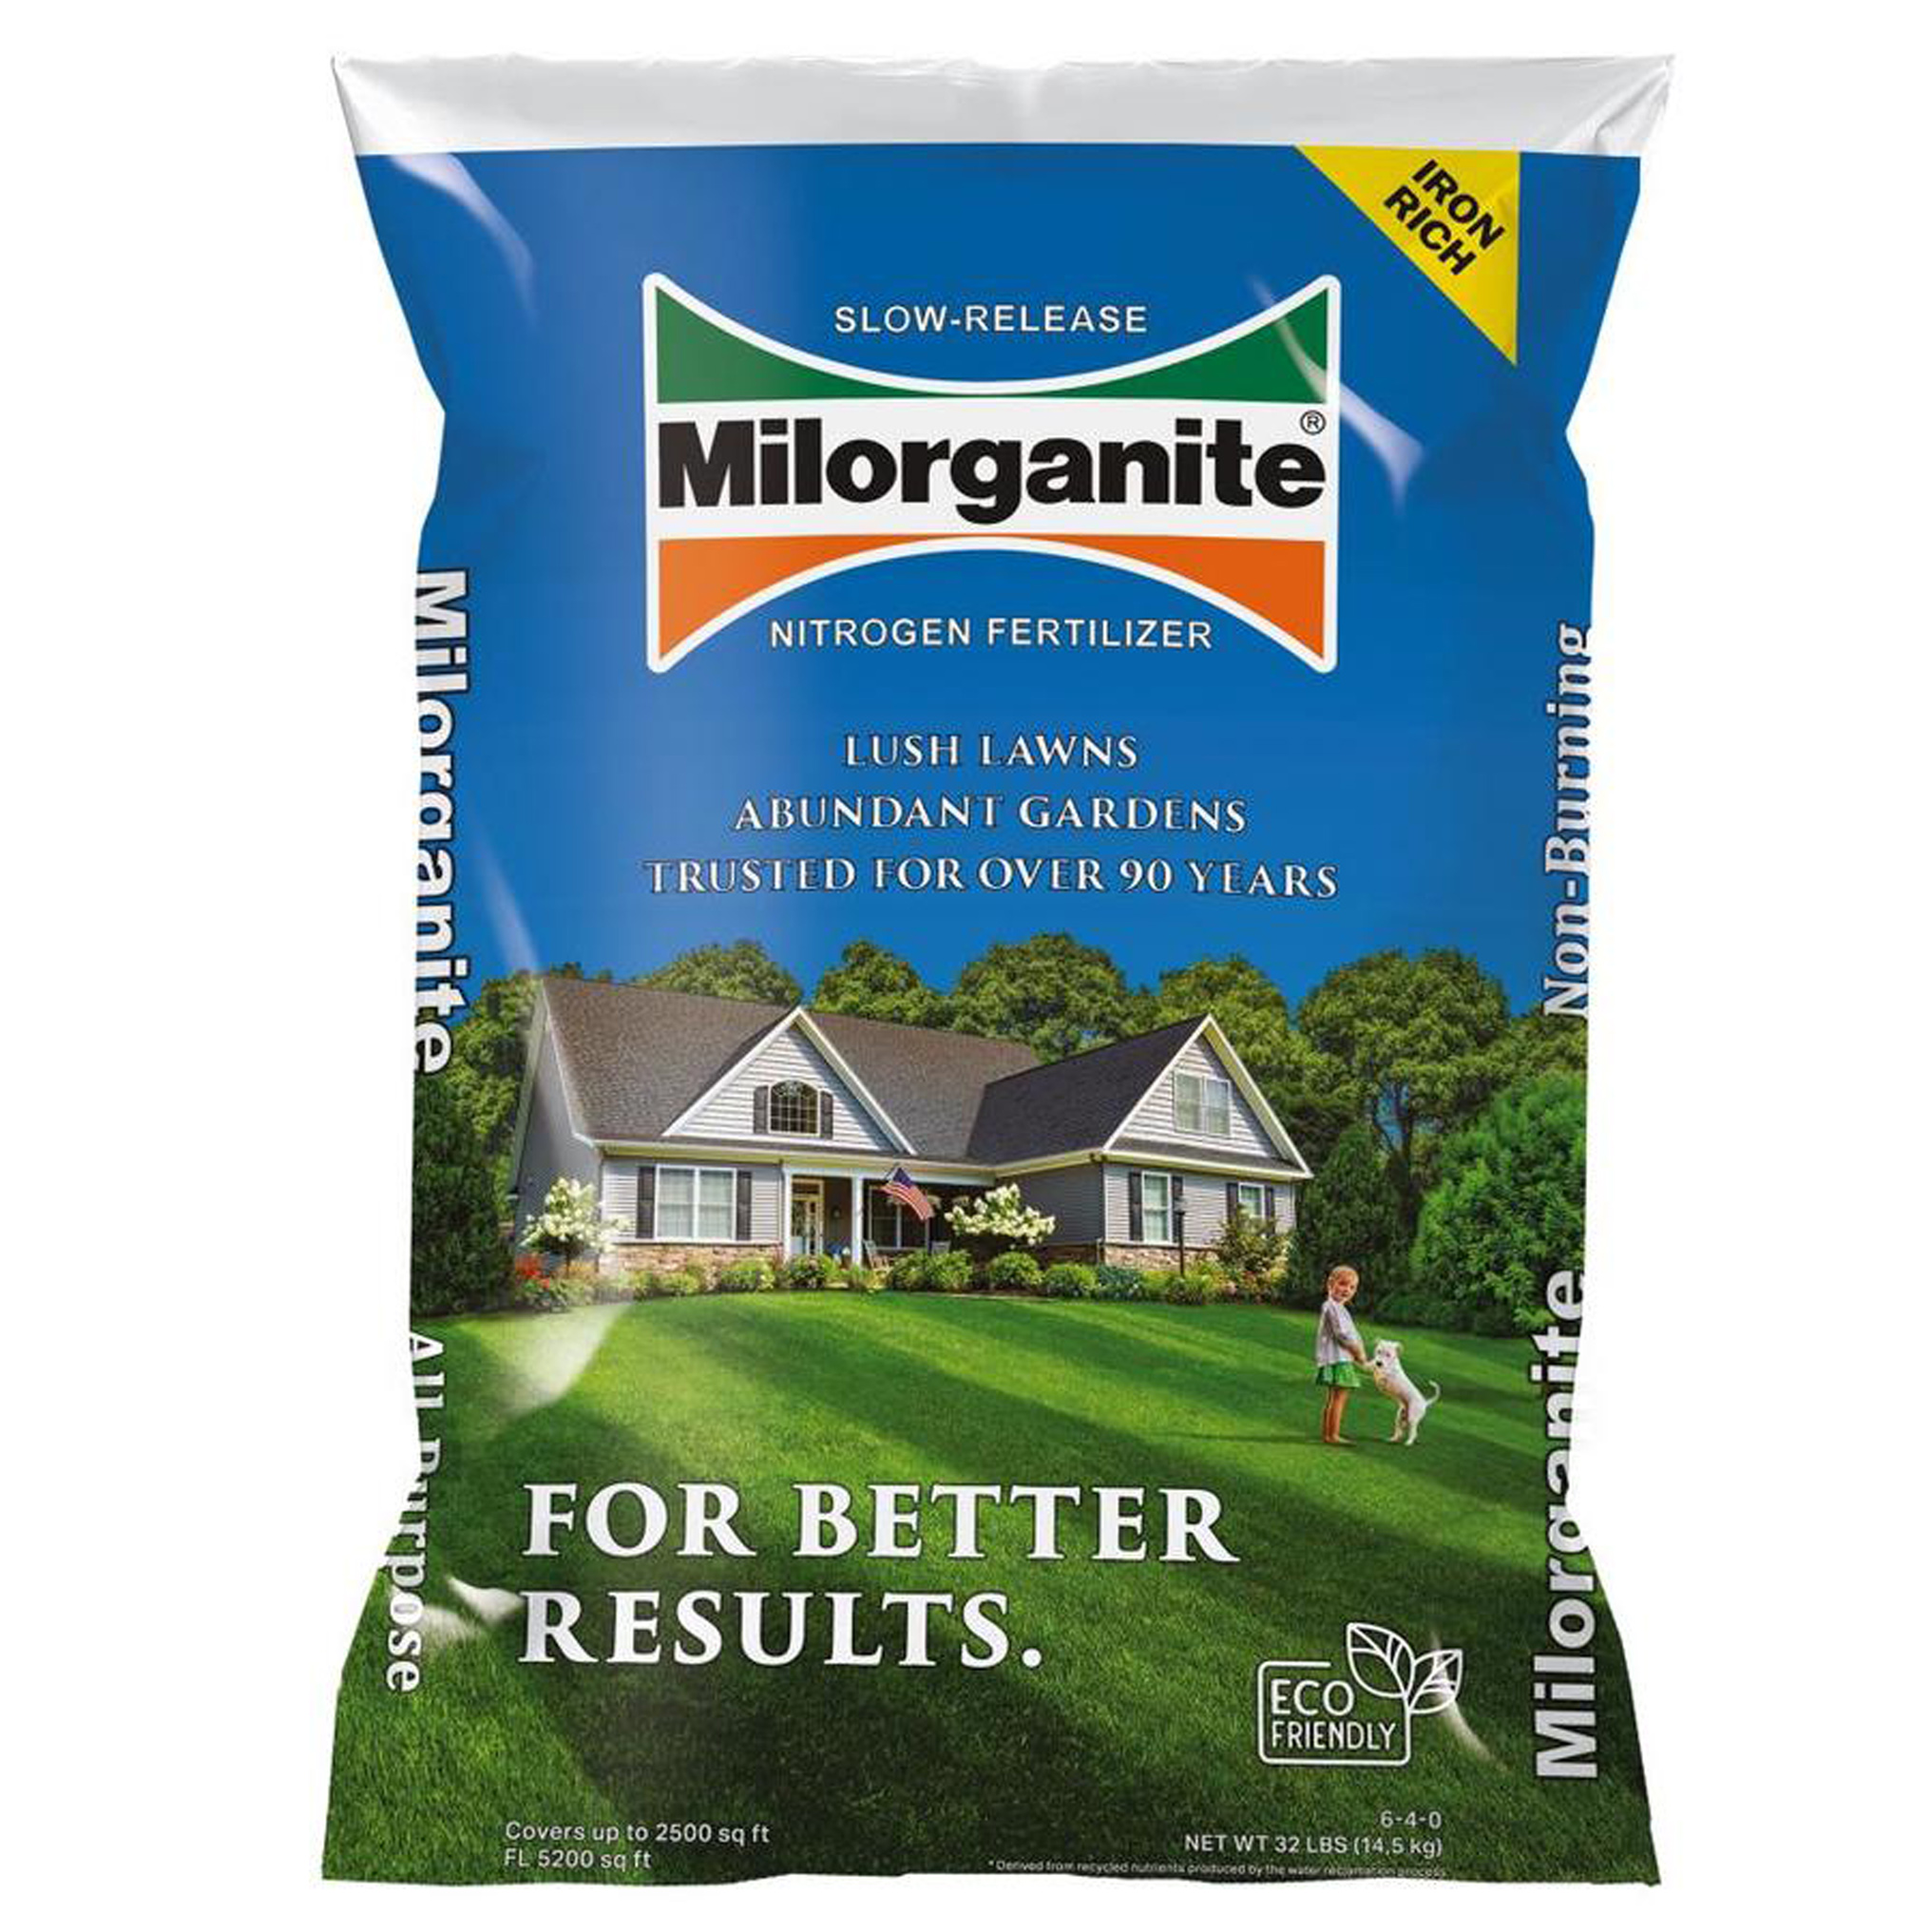 Milorganite Long Lasting All Purpose Lawn Food Fertilizer 6-4-0, 32 lbs - Walmart.com $12.78